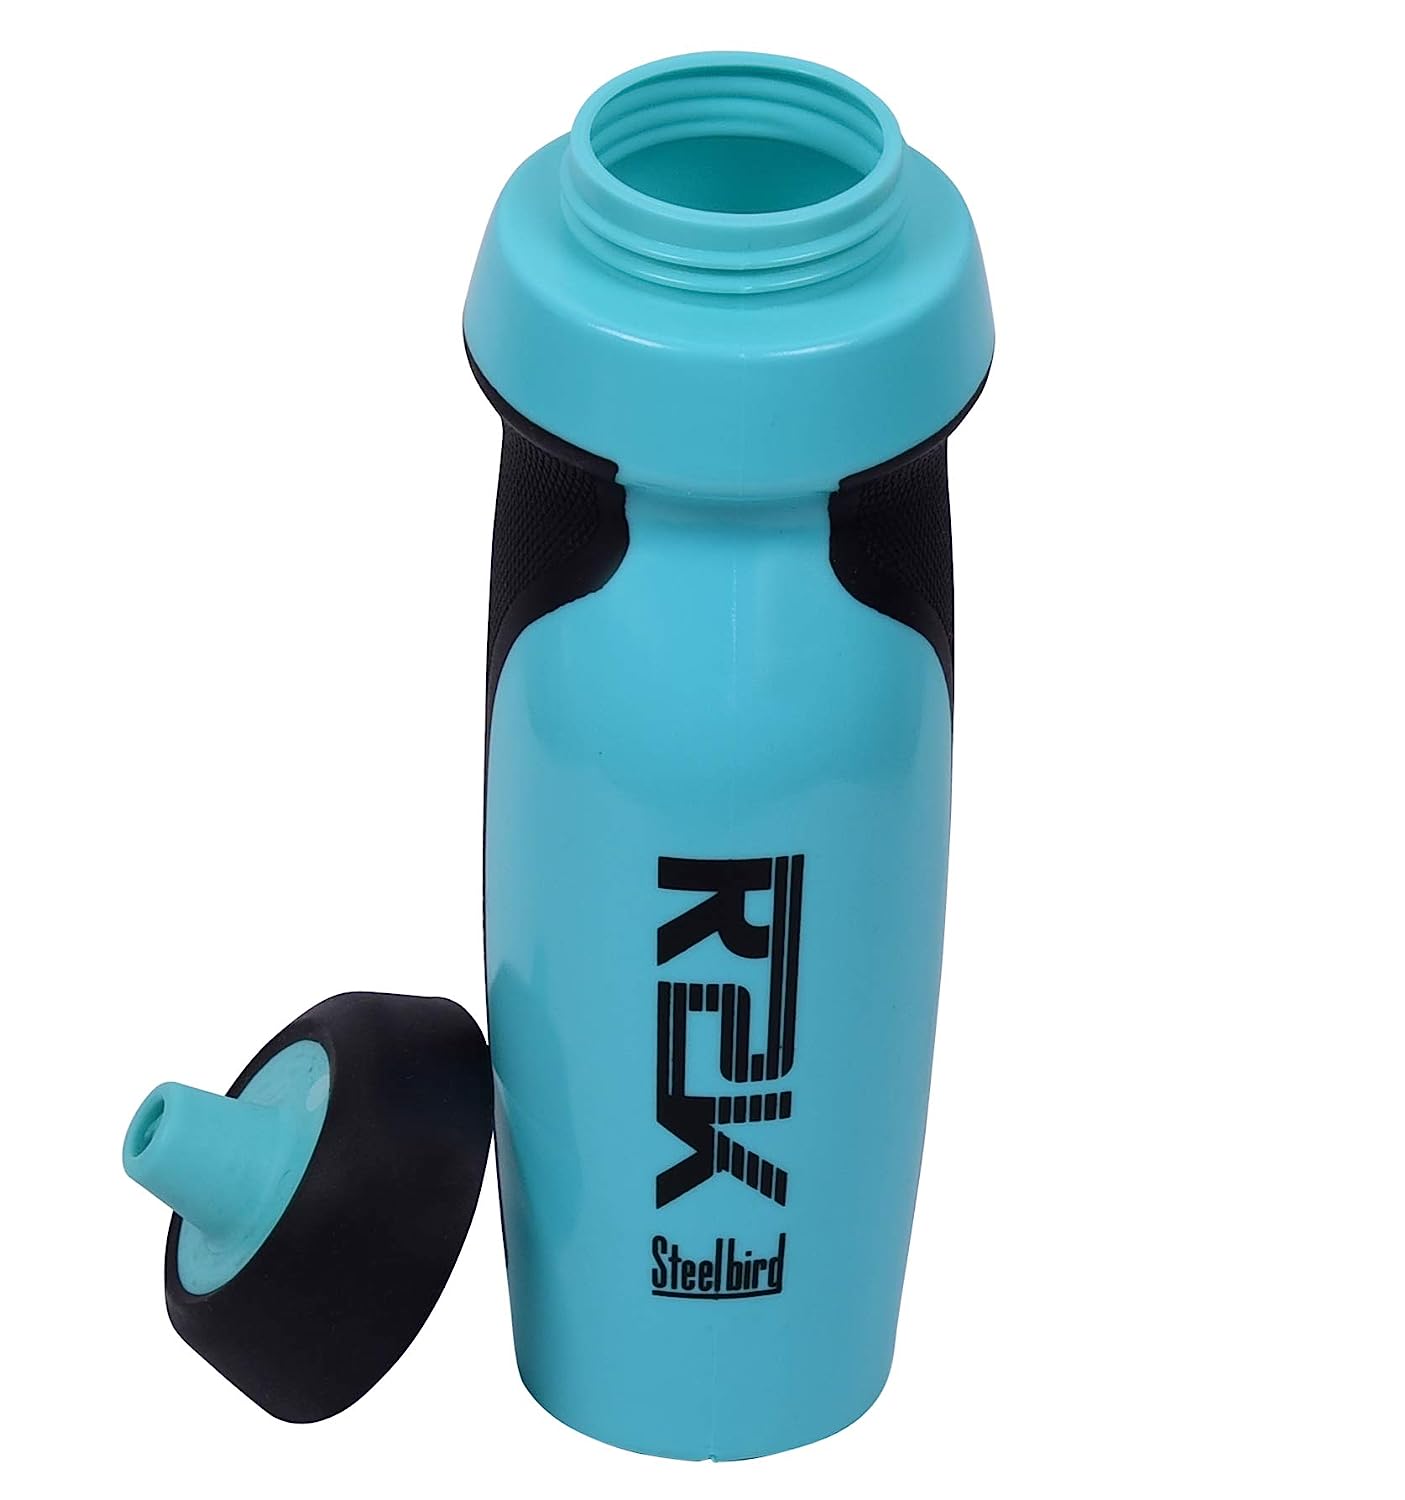 Steelbird Altus R2K Sports Water Sipper / Bottle For Players, Gym, School Kids (Cool Mint, 530 ml)